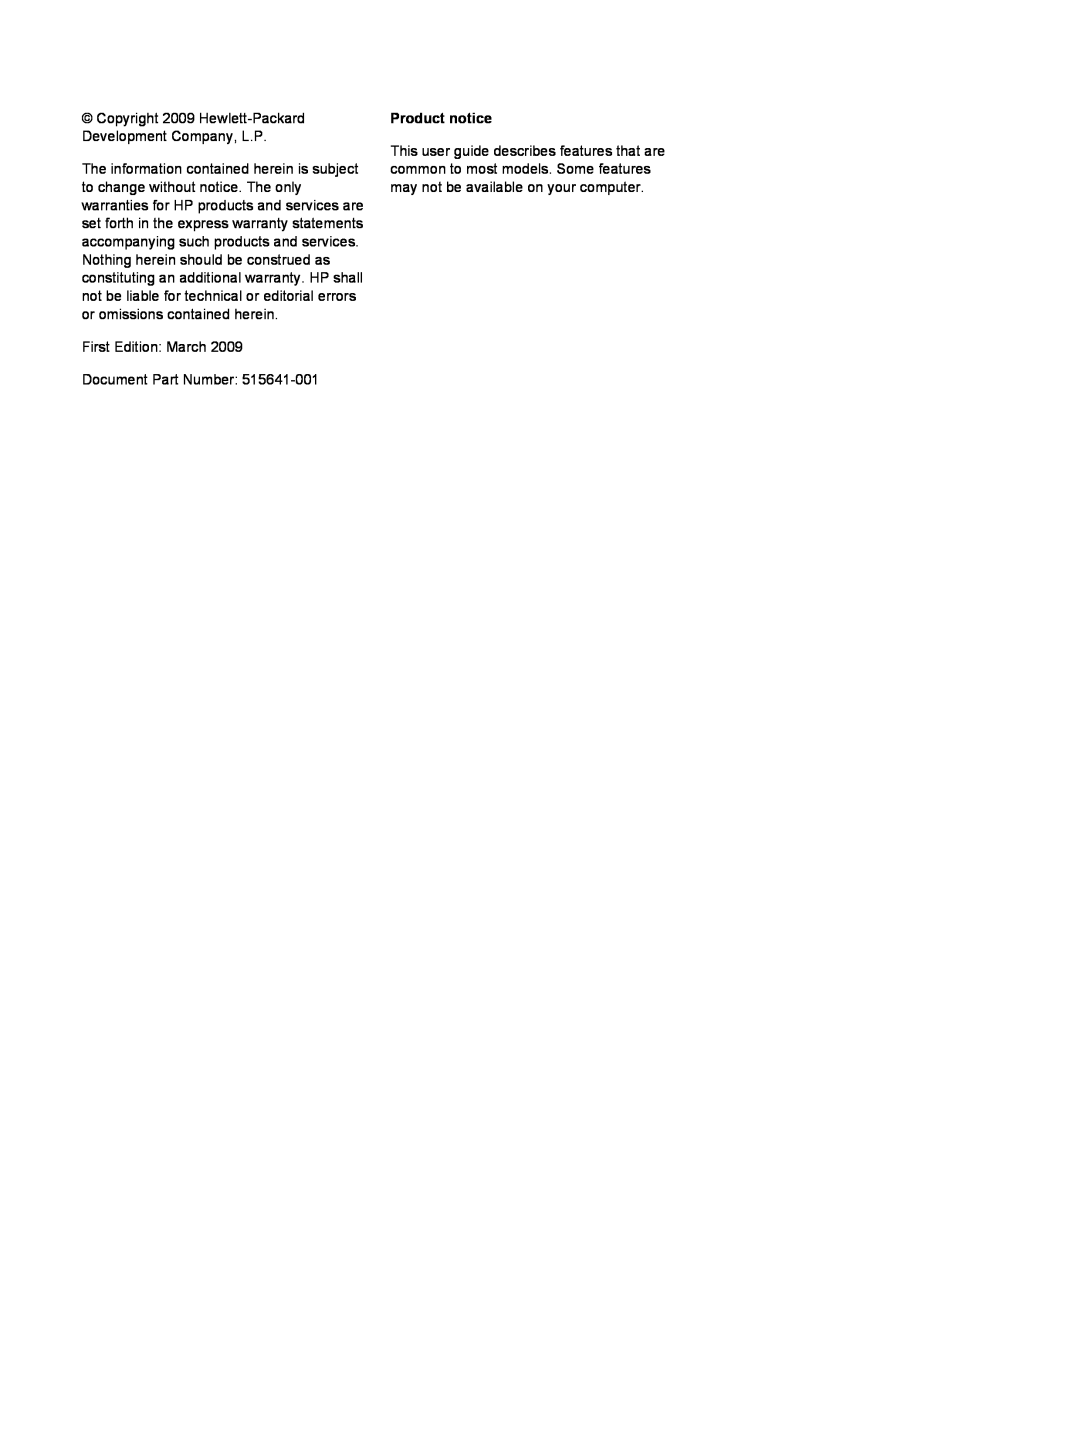 HP CQ61-125TU manual Copyright 2009 Hewlett-Packard Development Company, L.P, First Edition March Document Part Number 